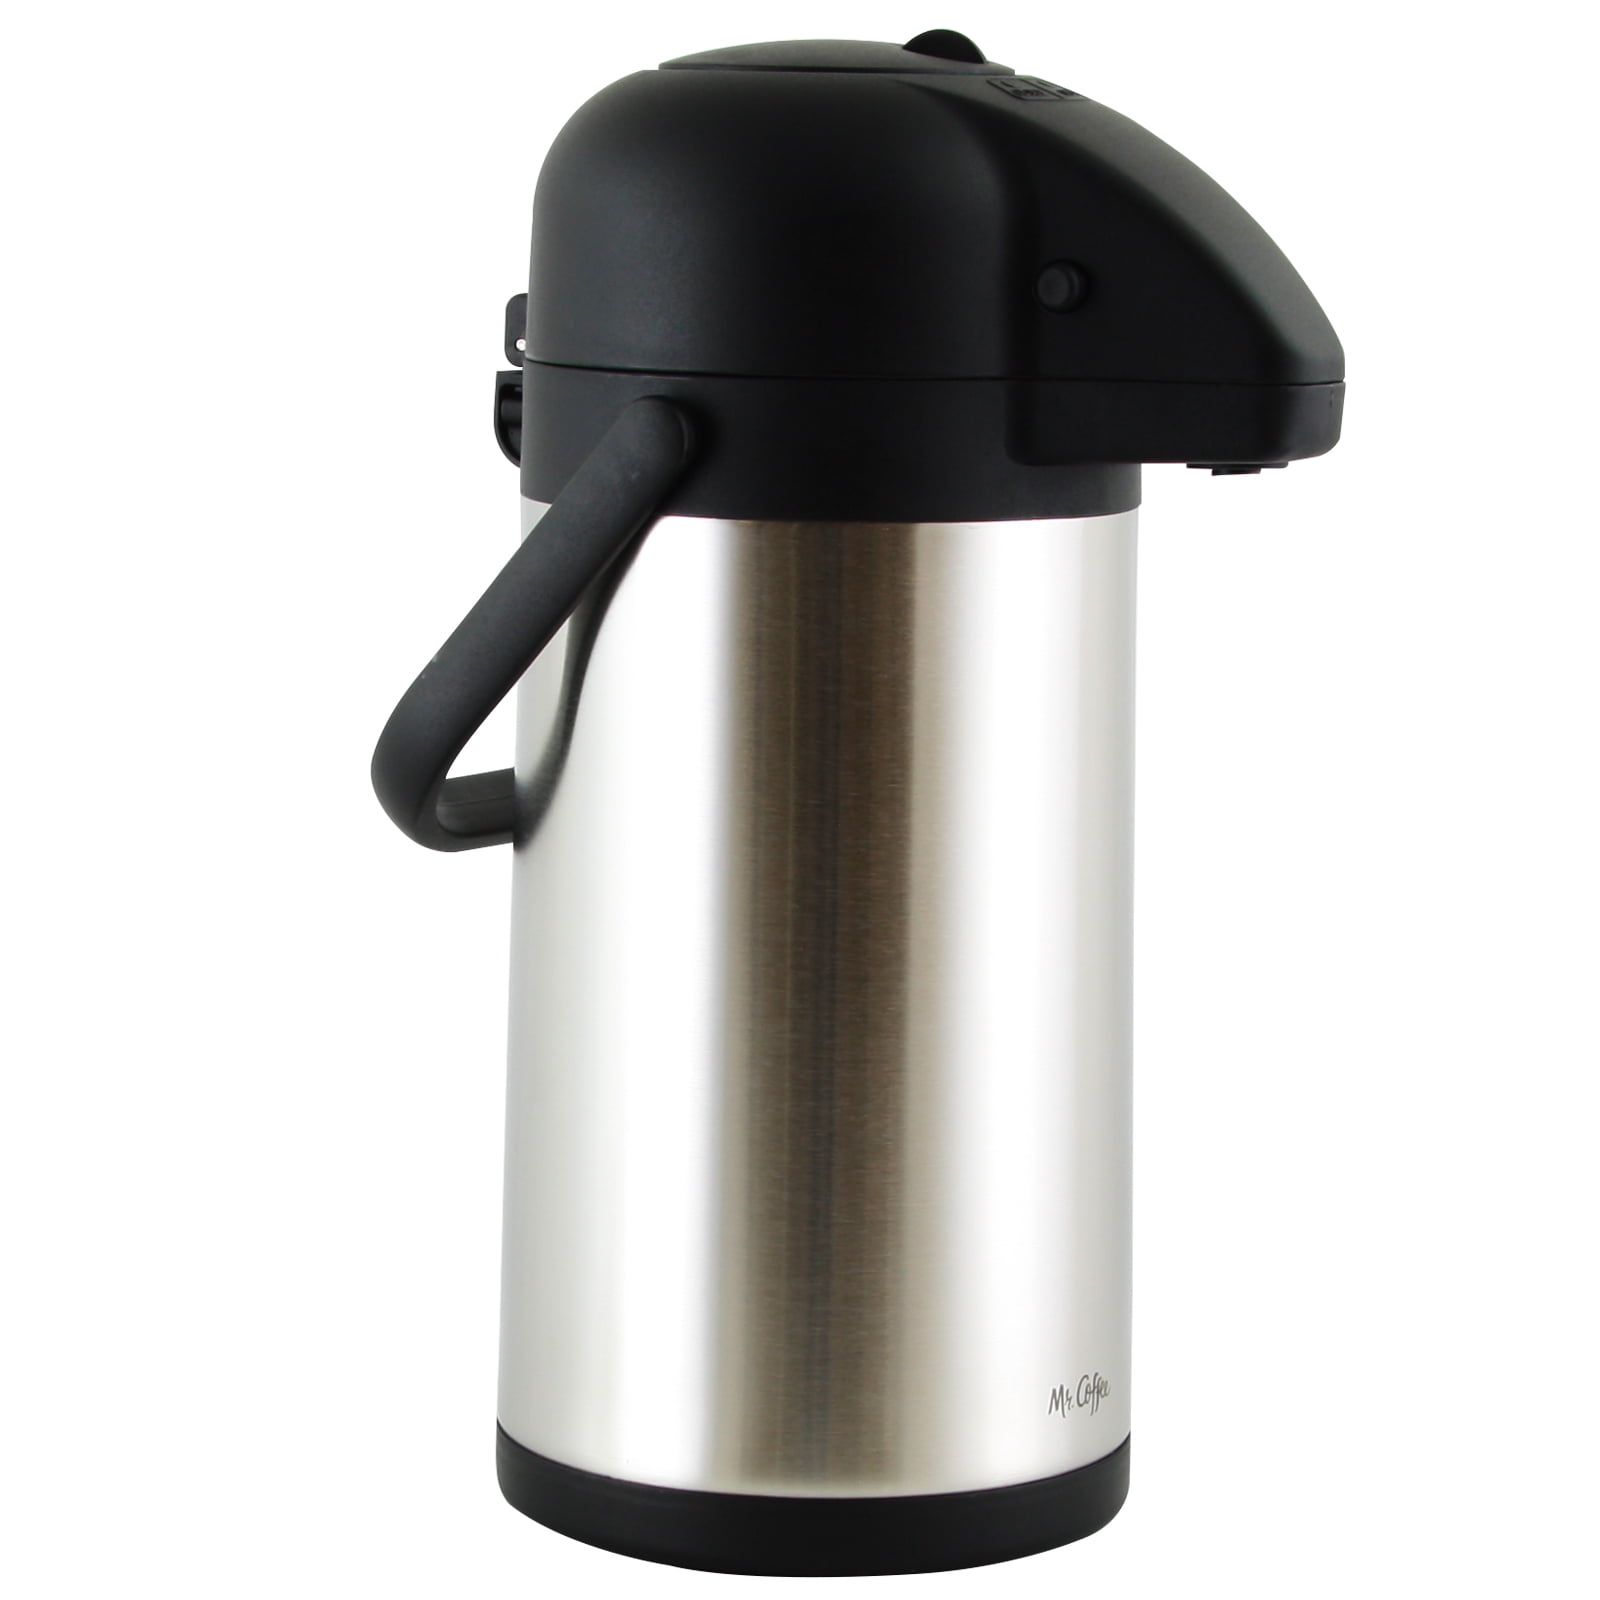 Vondior Airpot Coffee Dispenser with Pump - Insulated Stainless Steel Coffee  Carafe (102 oz.) - Thermal Beverage Dispenser - Thermos Urn